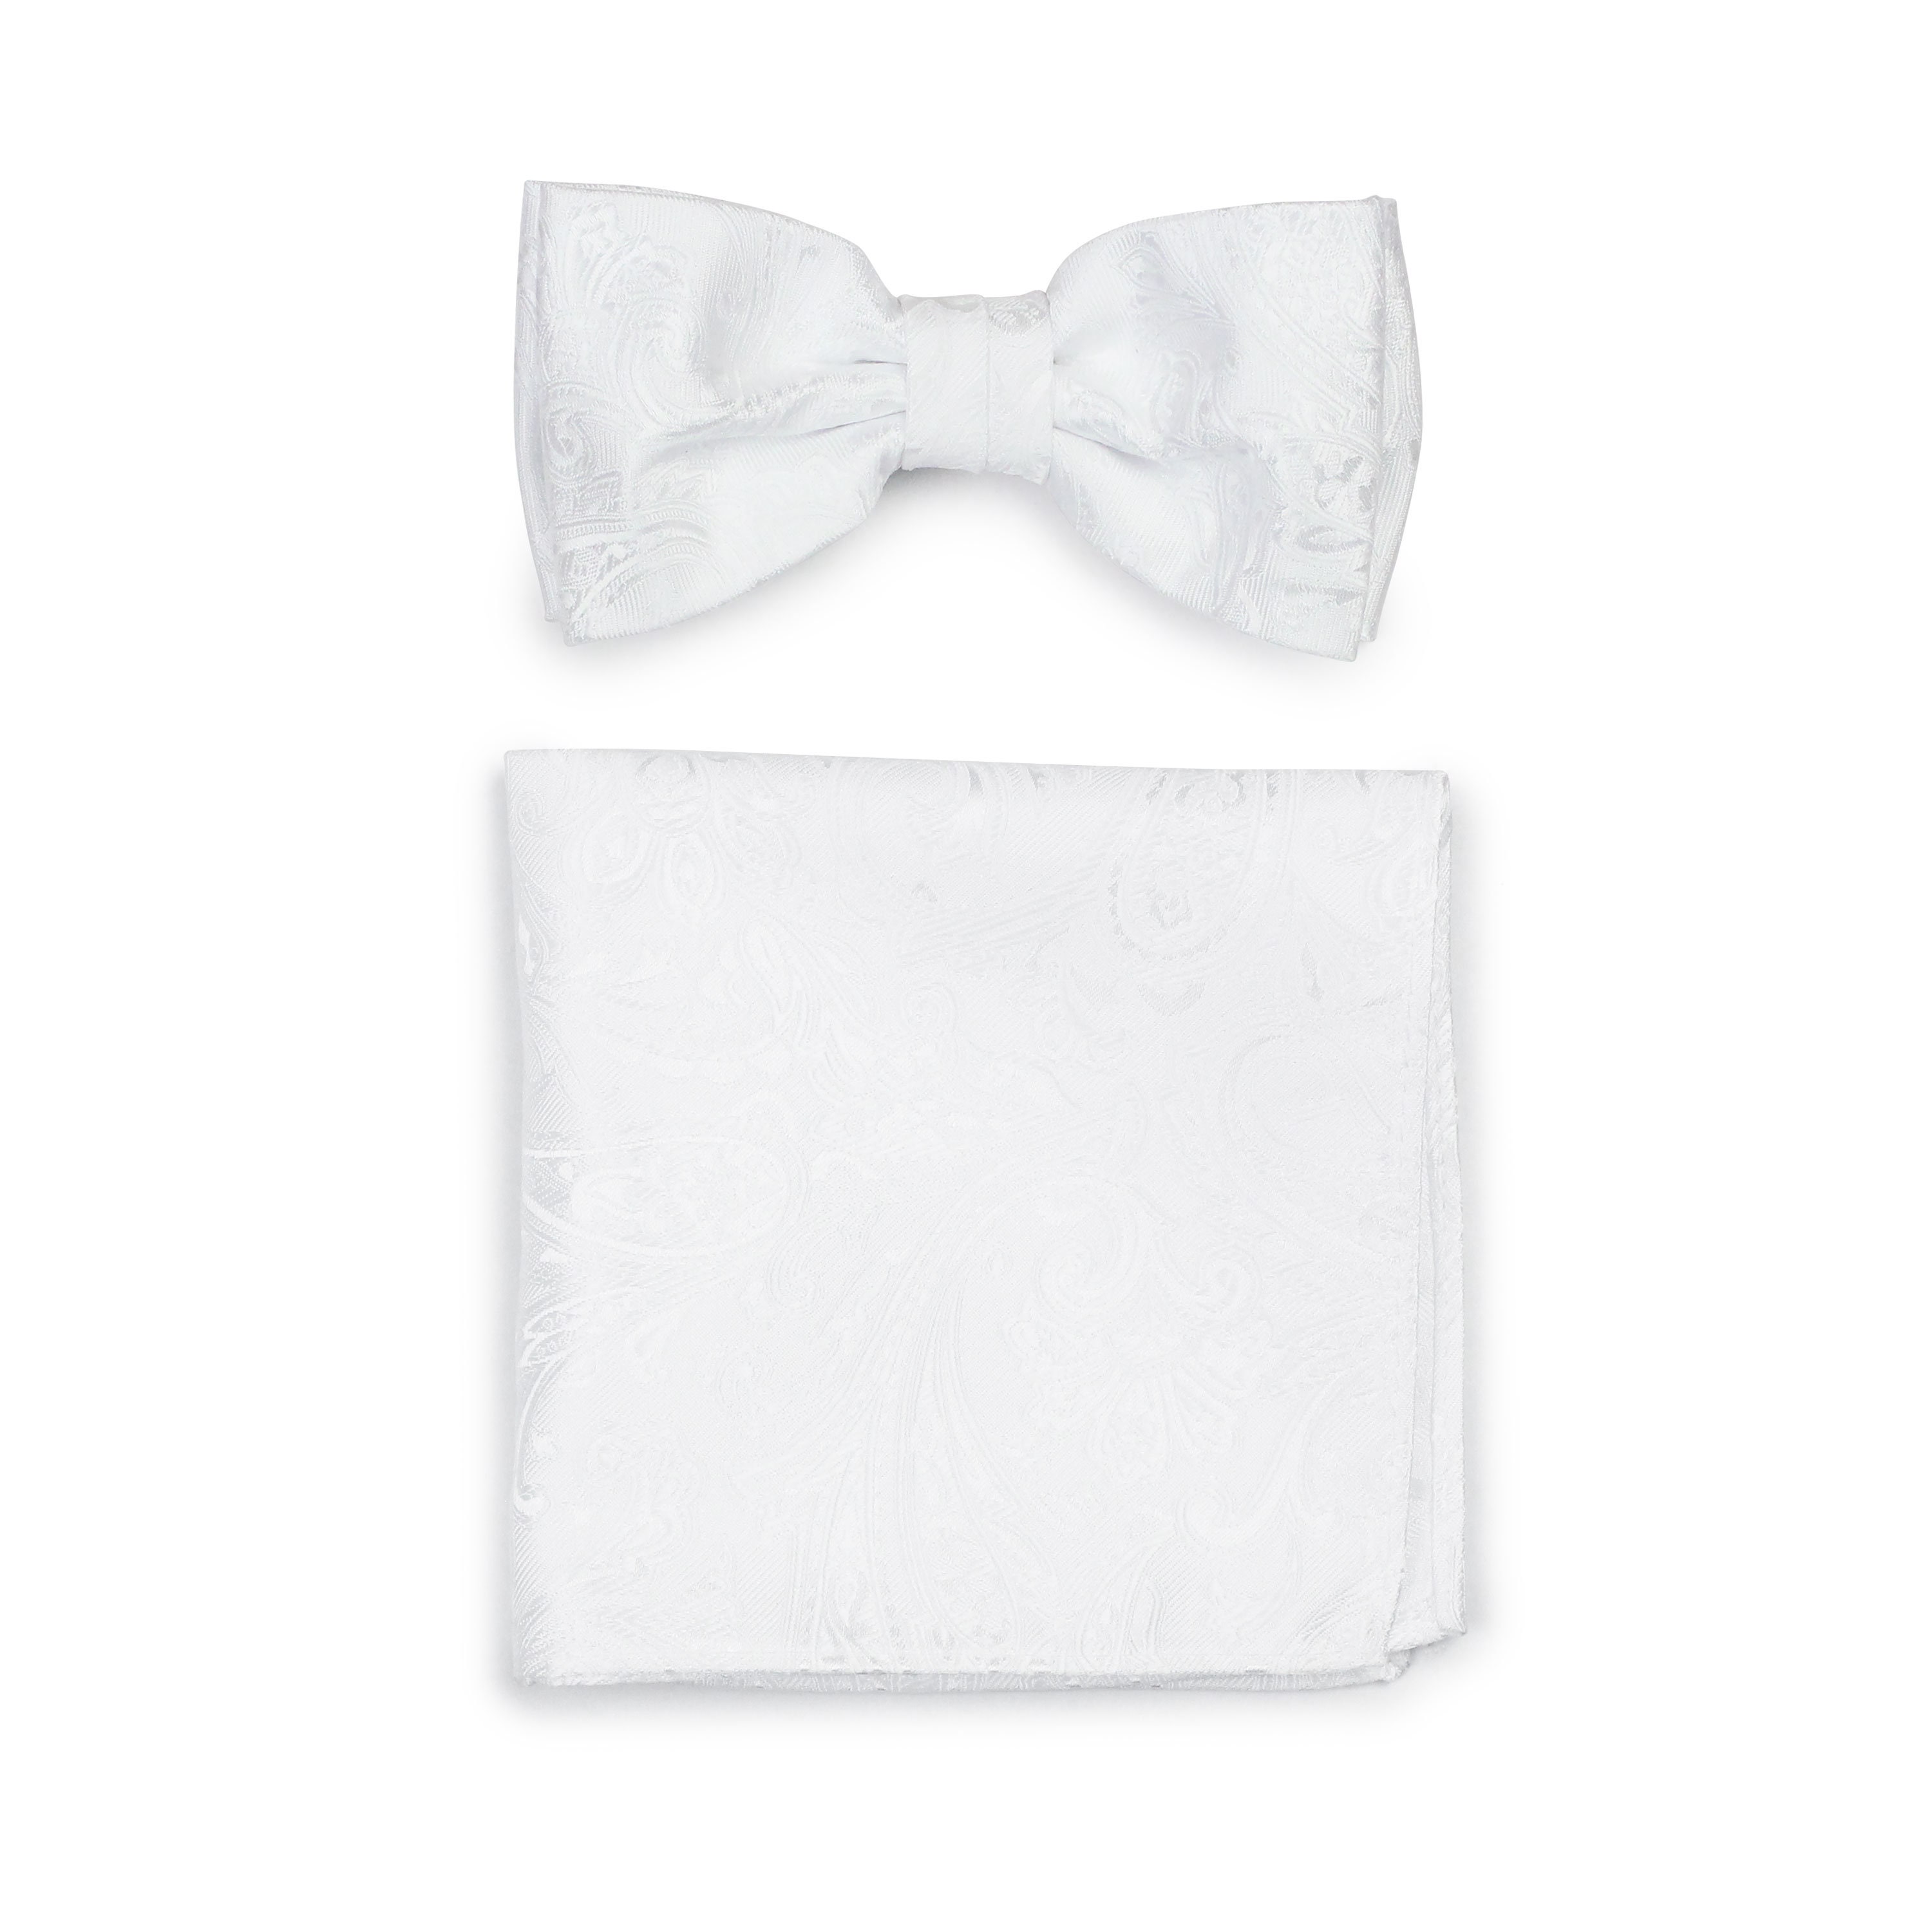 New formal Men's micro fiber pretied bow tie & hankie set paisley silver wedding